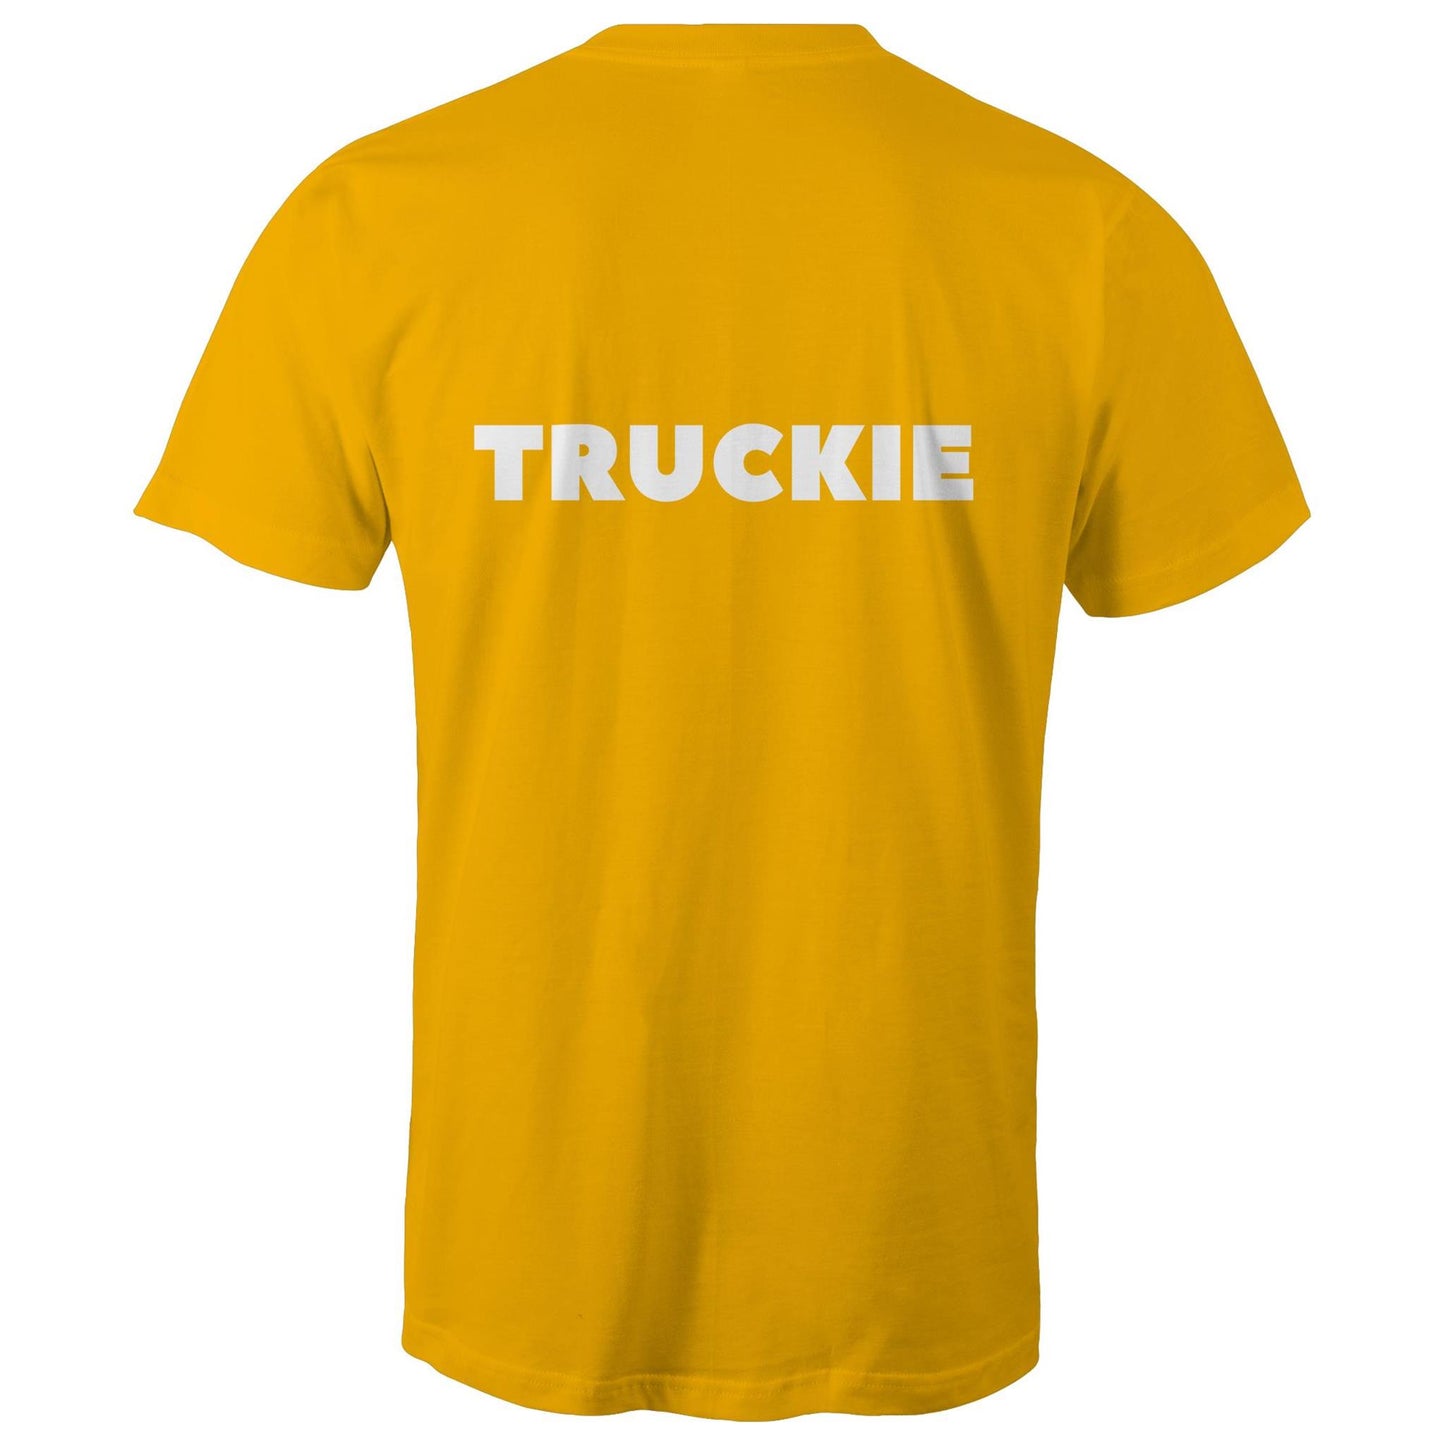 TRUCKIE - Unisex T-Shirt